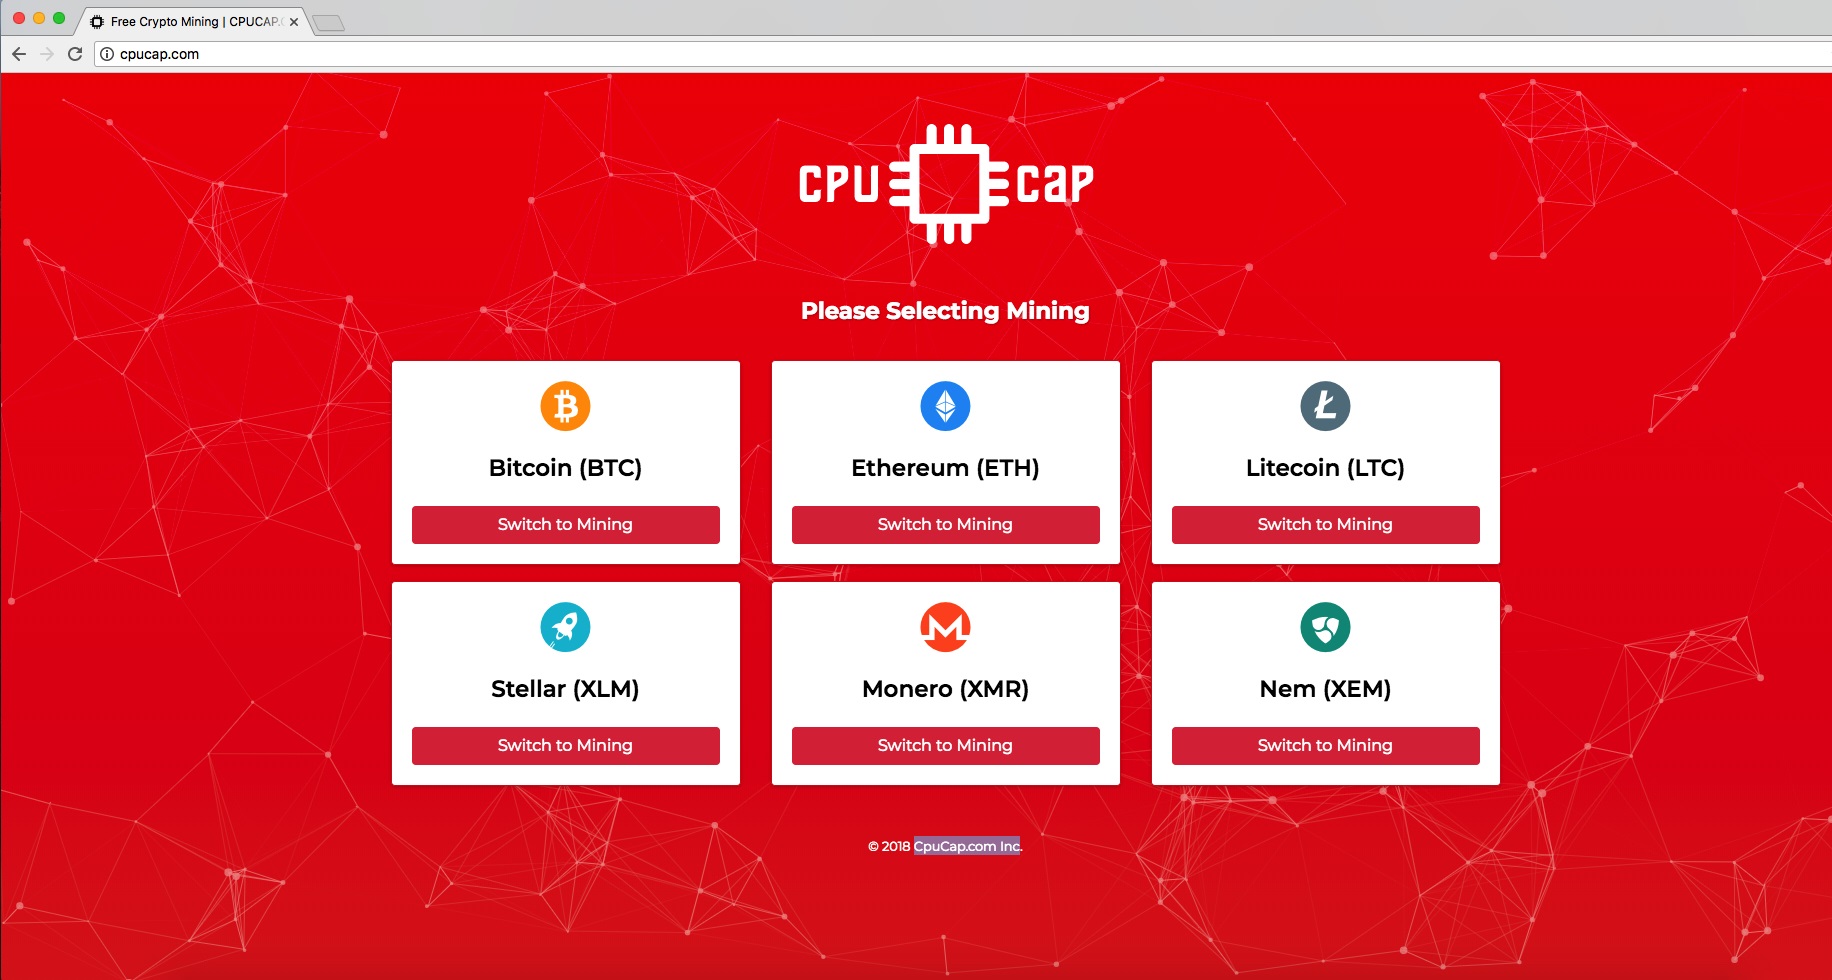 Cpucap Com Cpucap Org Cpuwin Com Review Scam Bitcoin - 